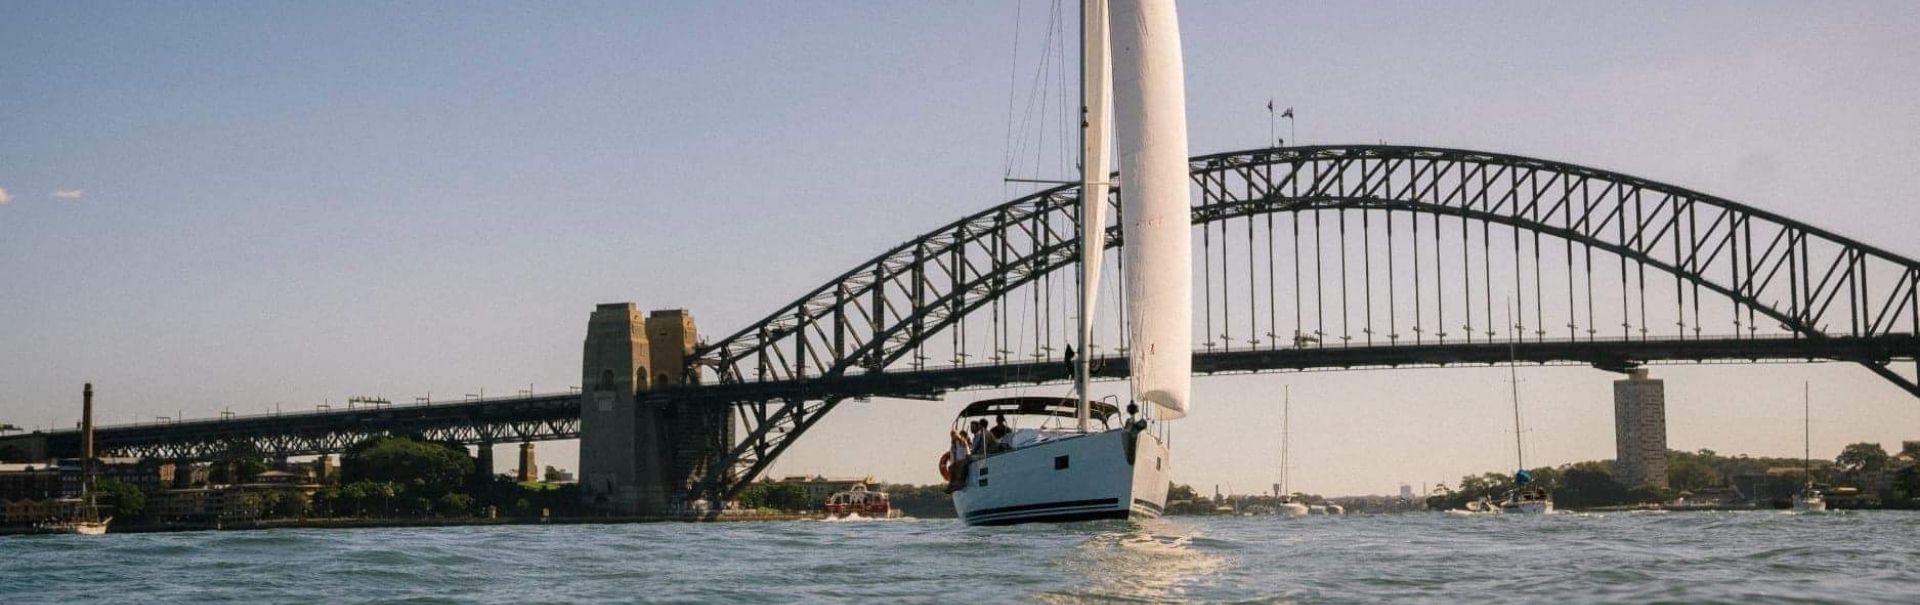 elan-yachts-impression-family-cruiser-sailboat-sydney-harbour